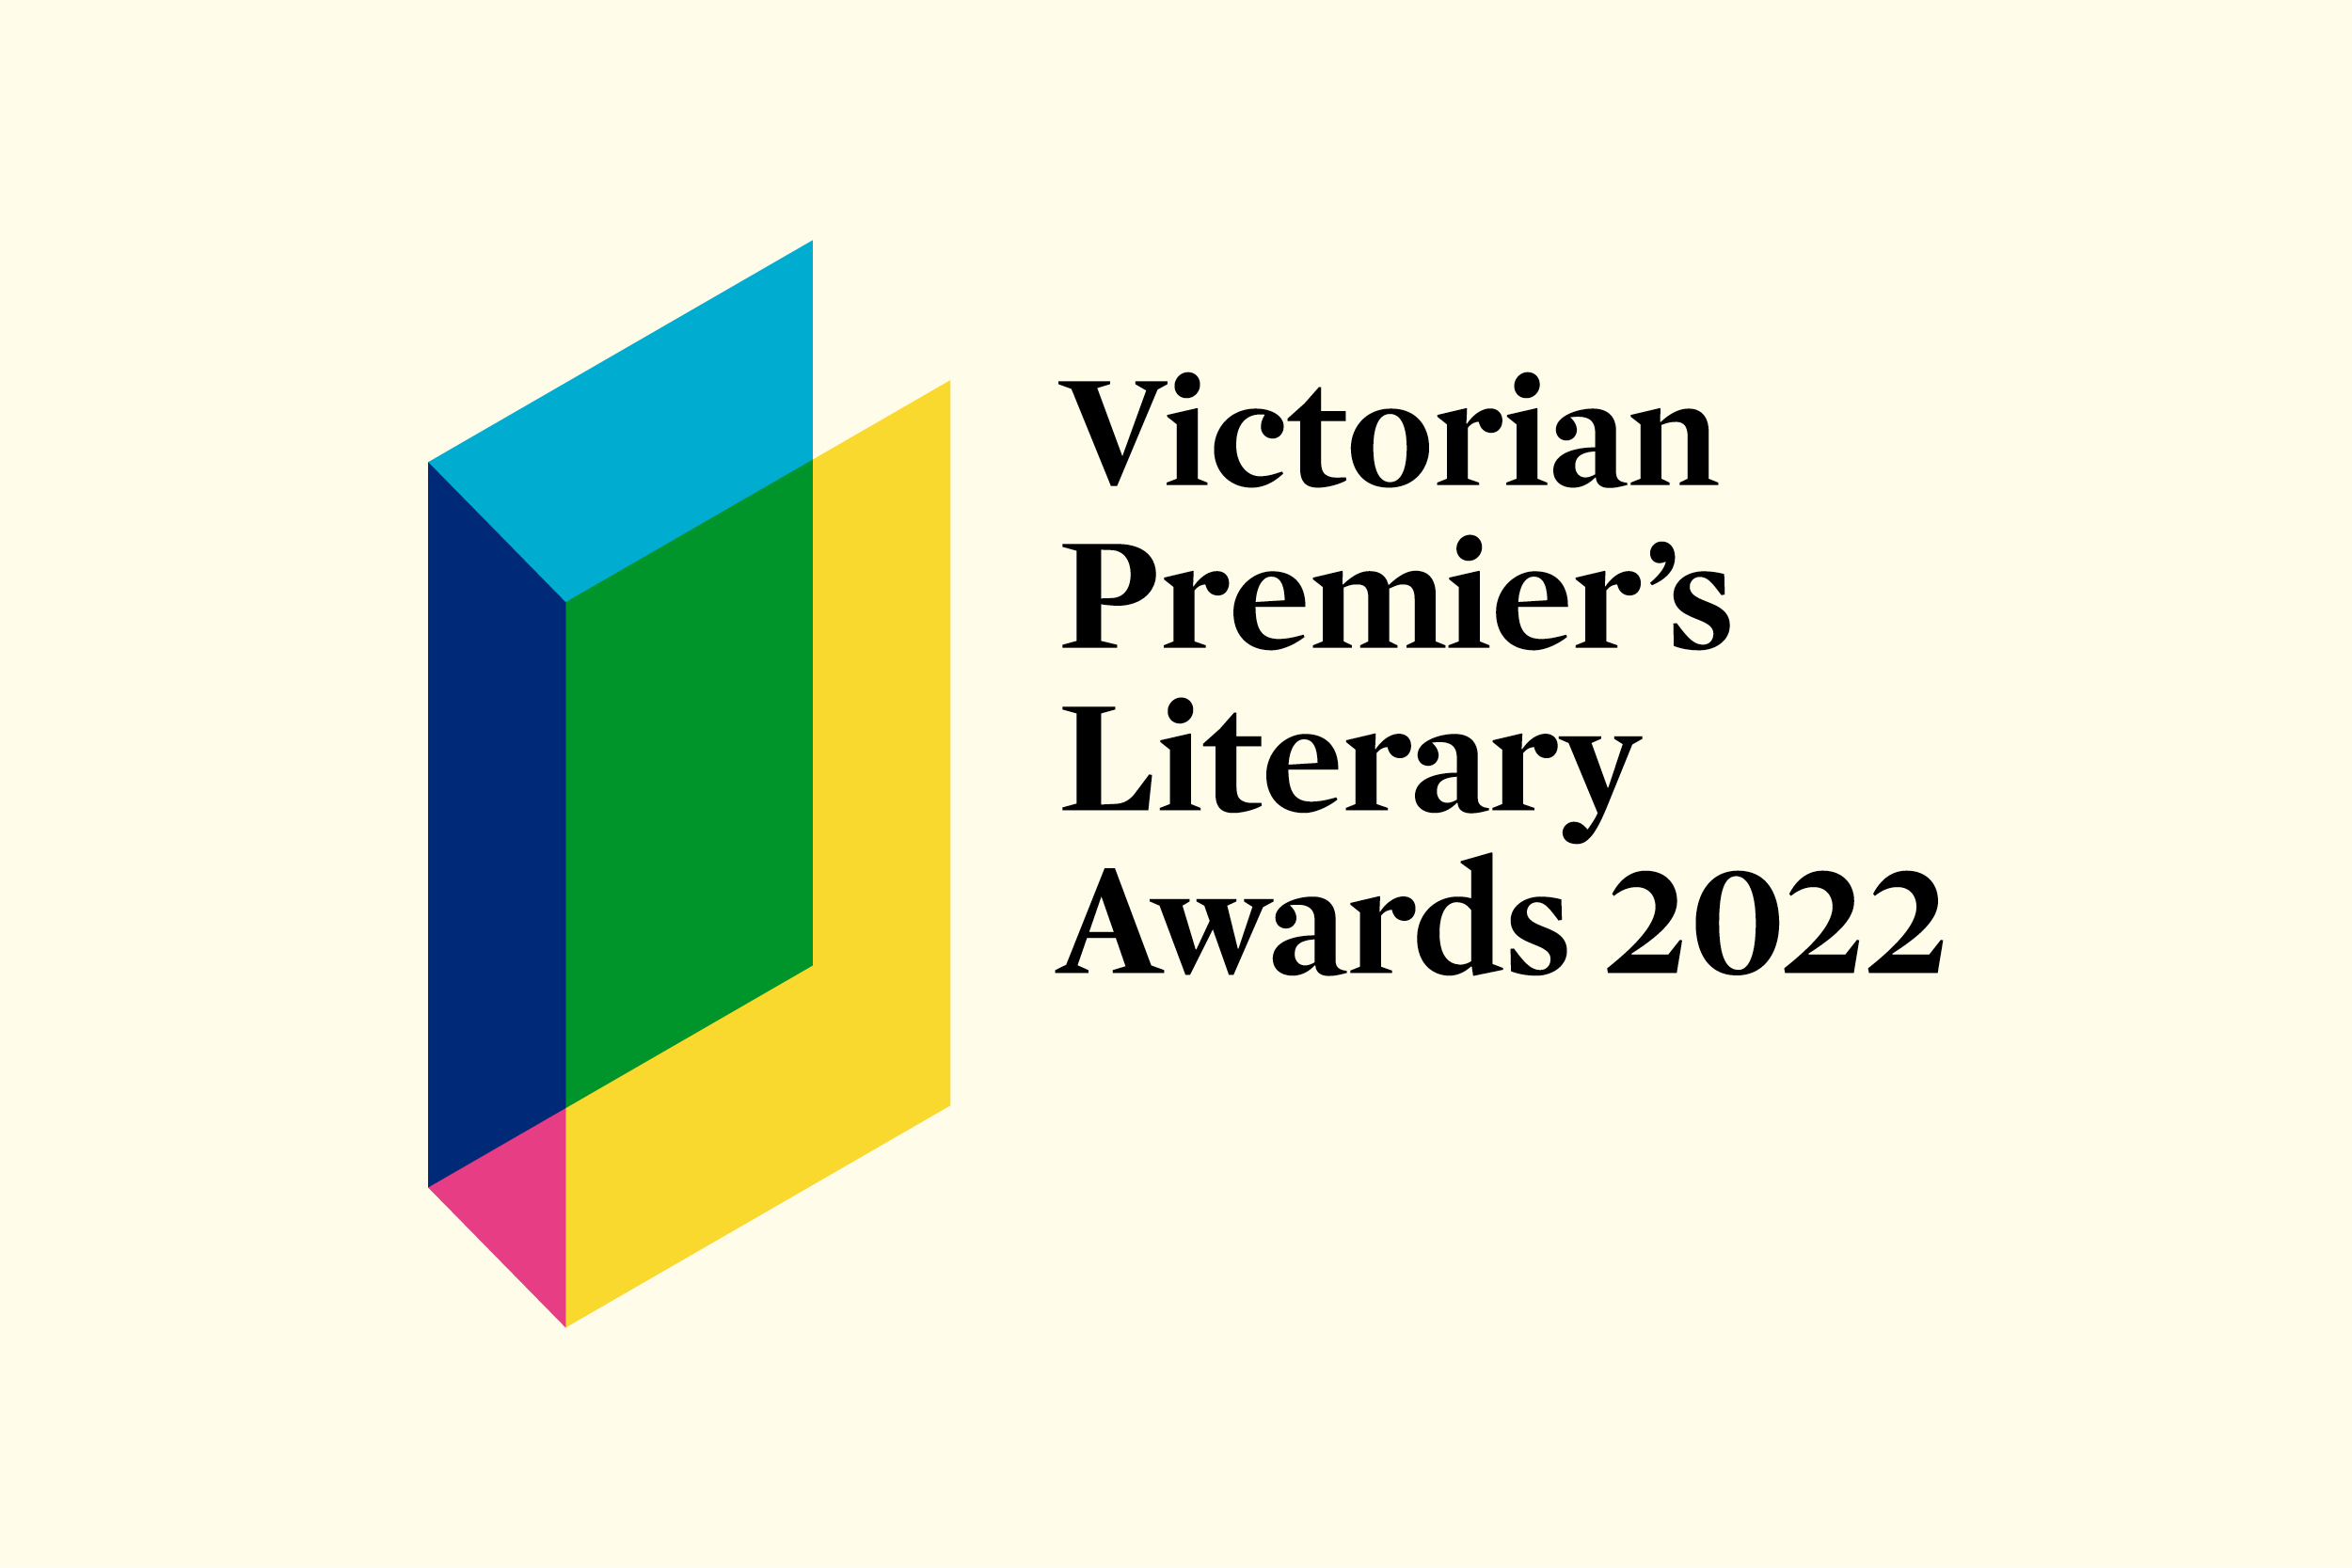 Black text on cream background: Victorian Premier's Literary Awards 2022